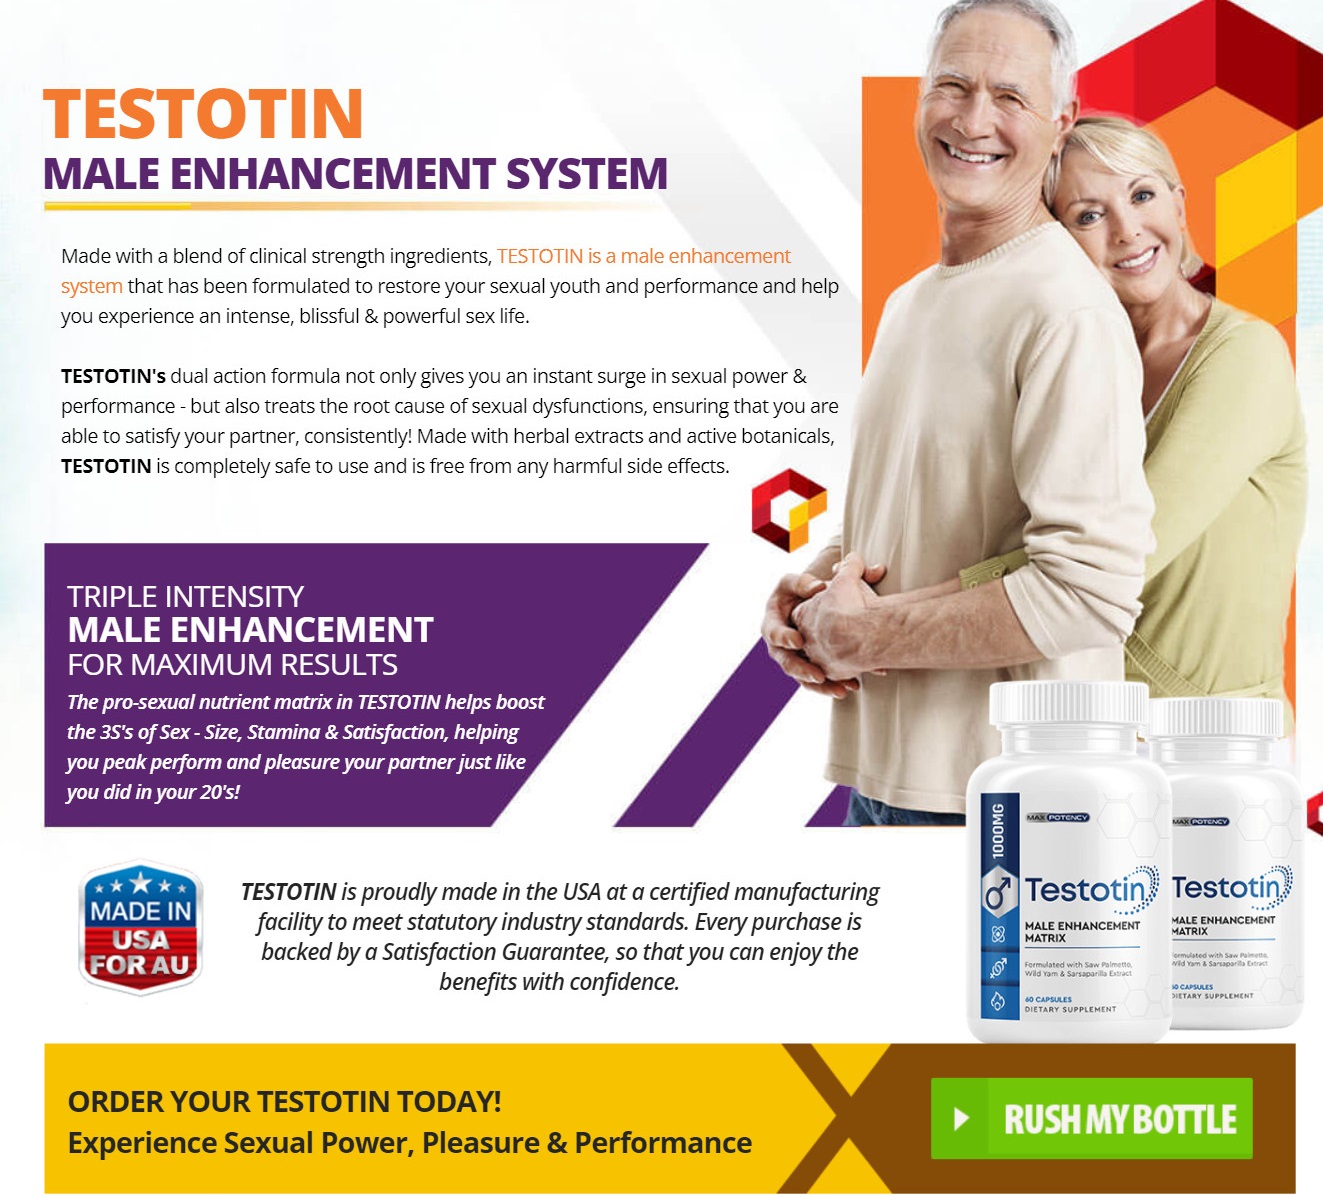 Testotin Male Enhancement Introduction